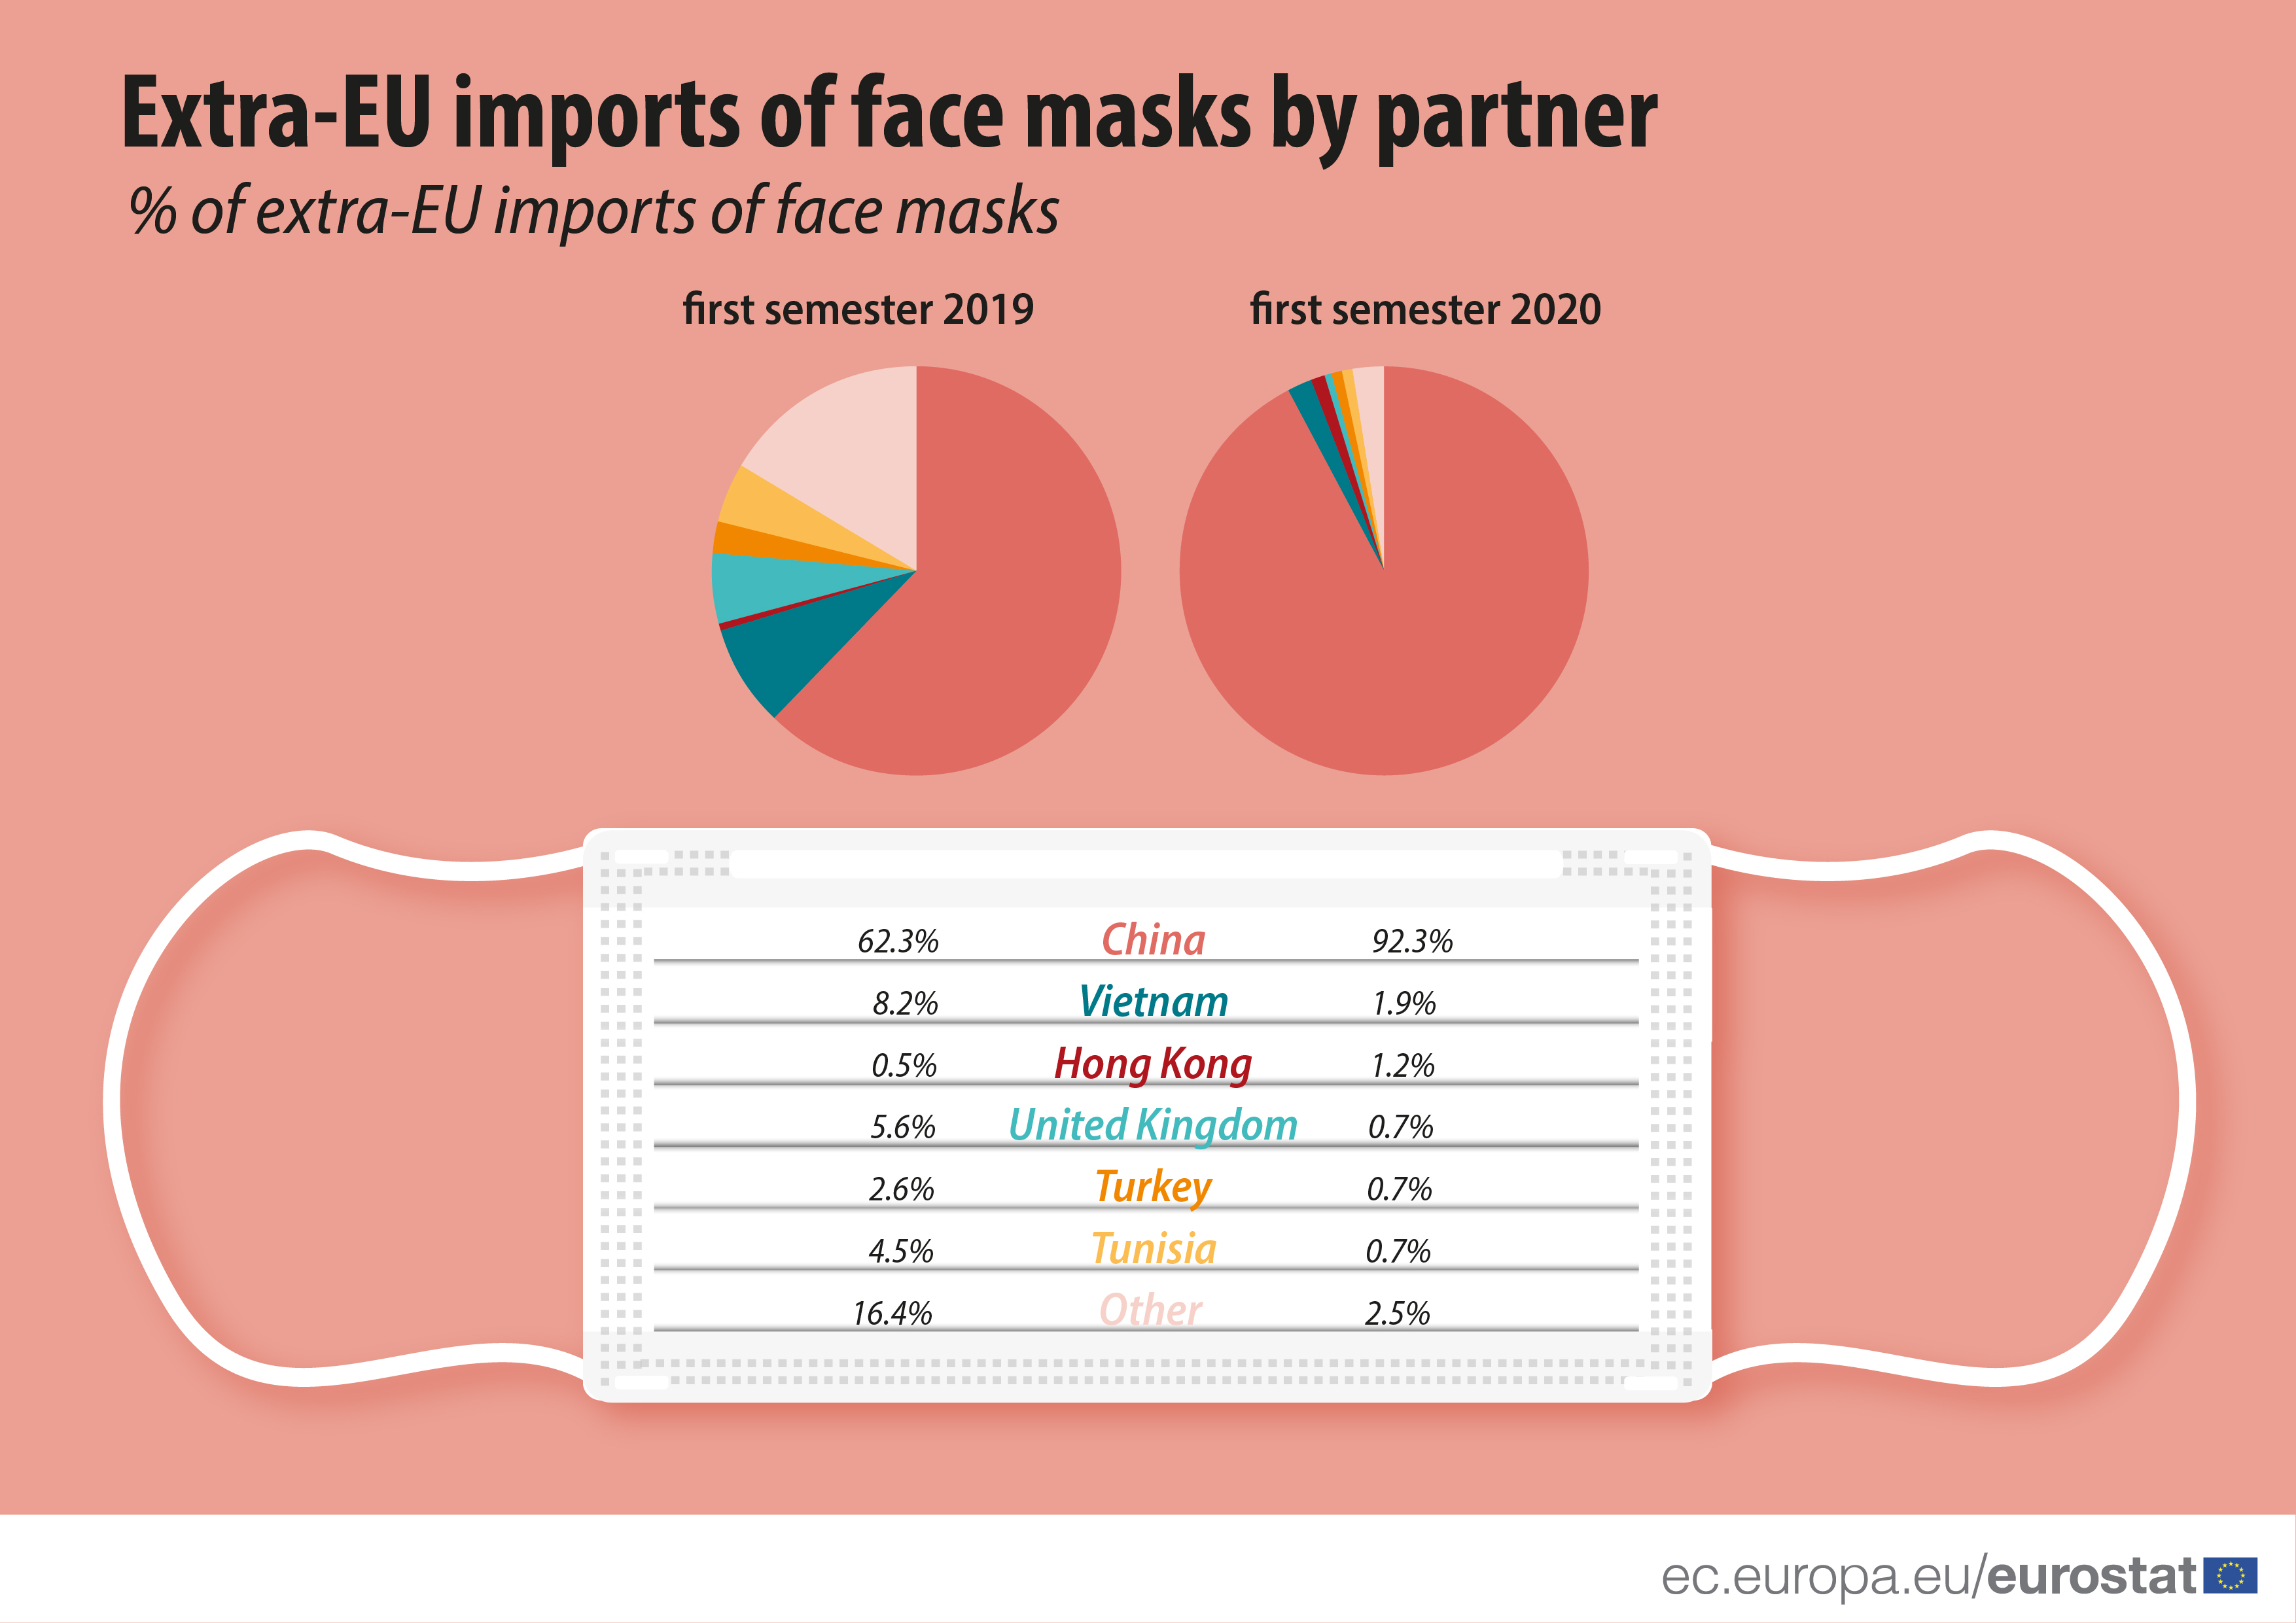  Extra-EU imports of face masks by partner 